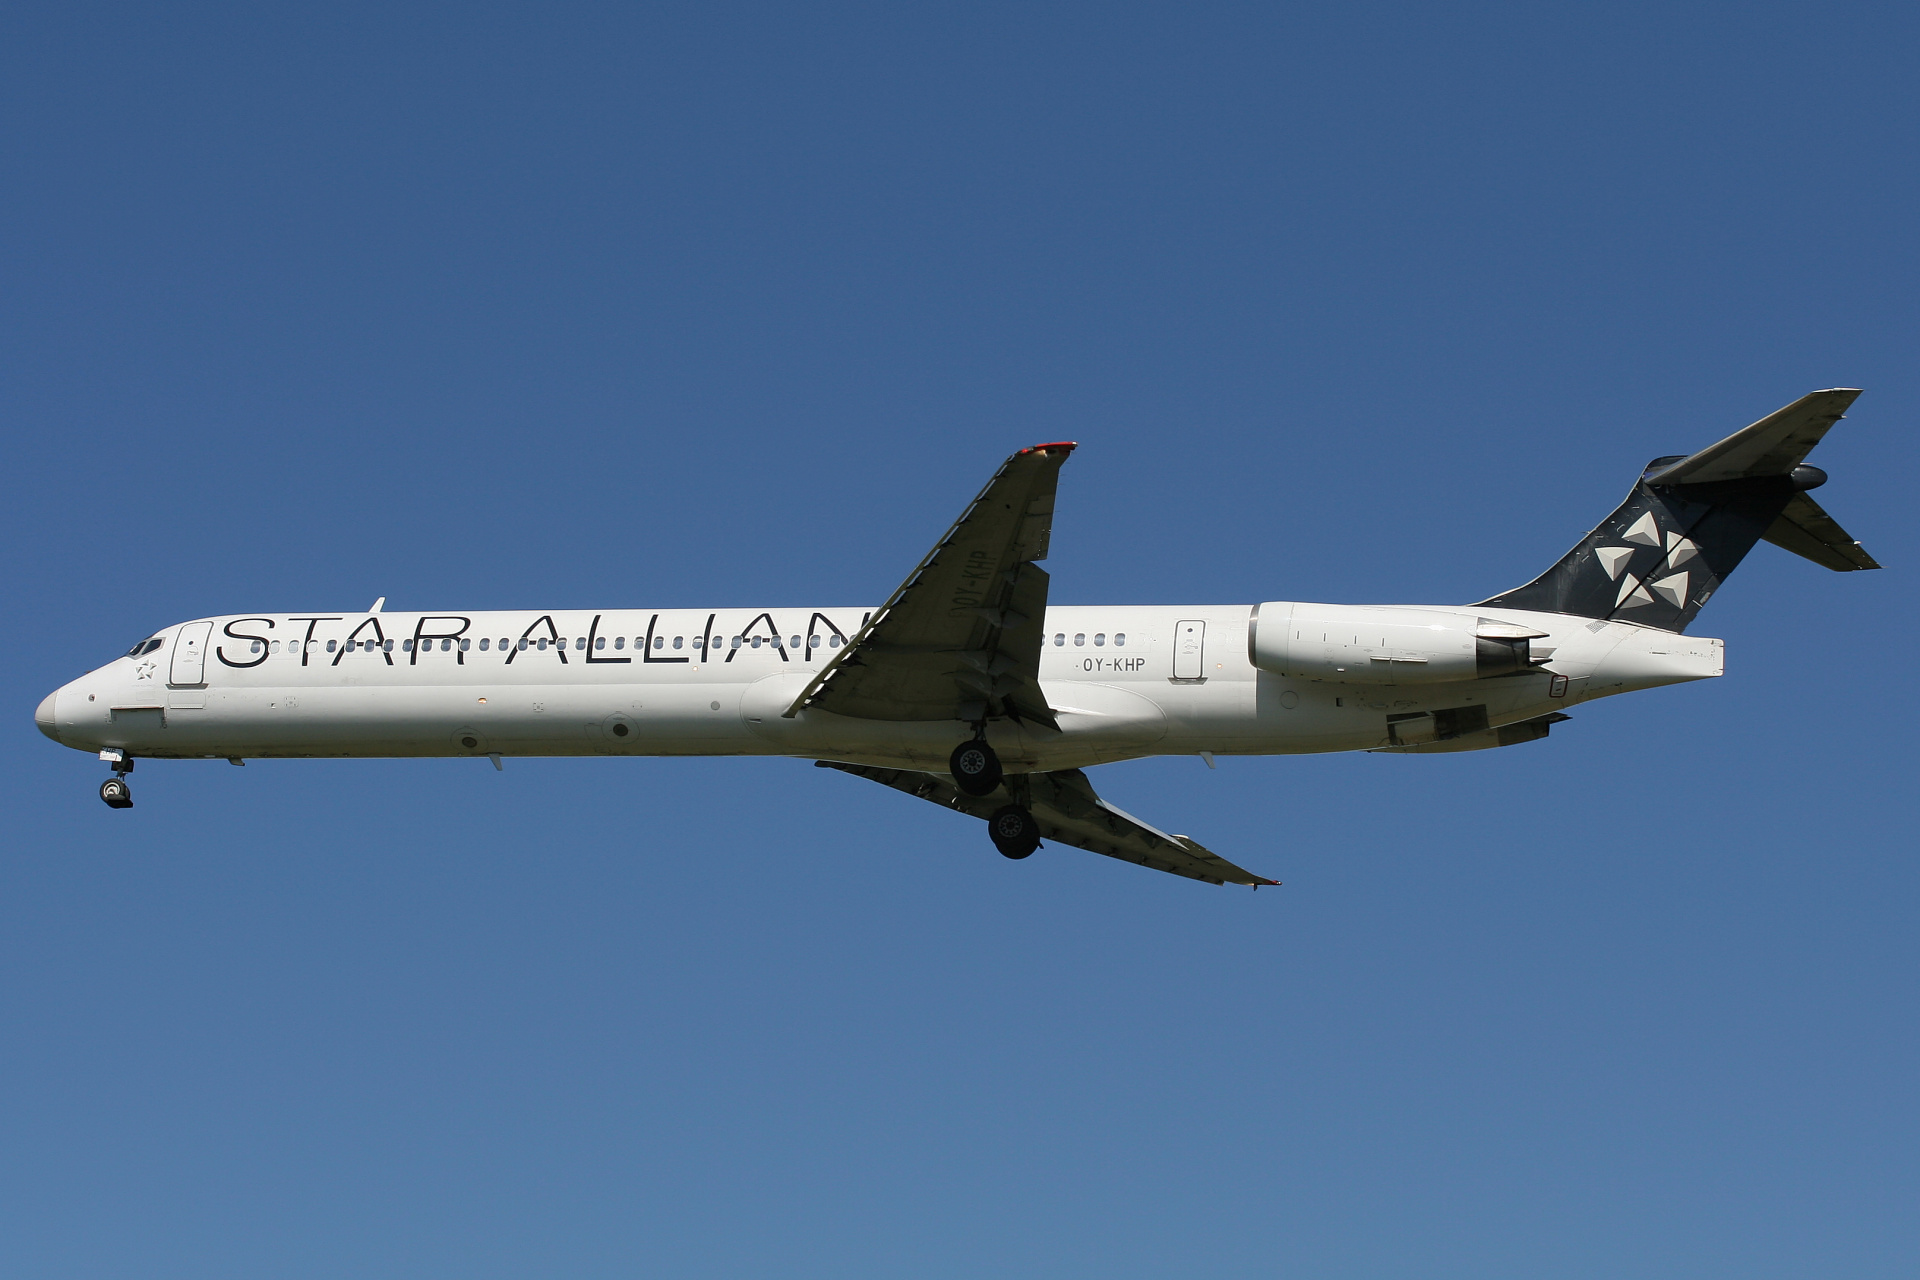 OY-KHP (malowanie Star Alliance) (Samoloty » Spotting na EPWA » McDonnell Douglas MD-82 » SAS Scandinavian Airlines)